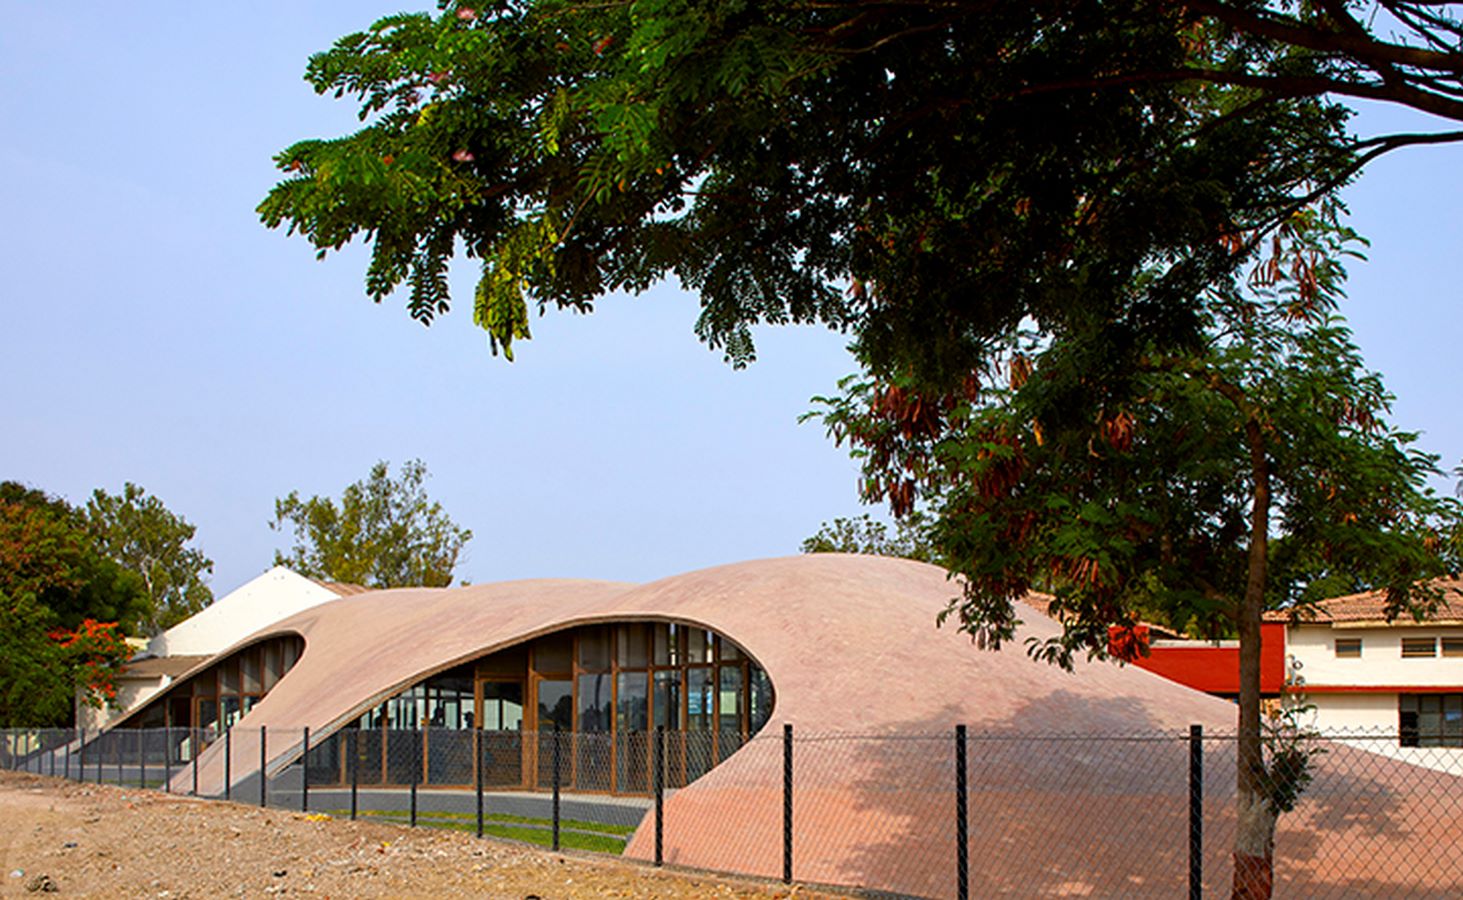 7 Innovative Public Space Designs in India